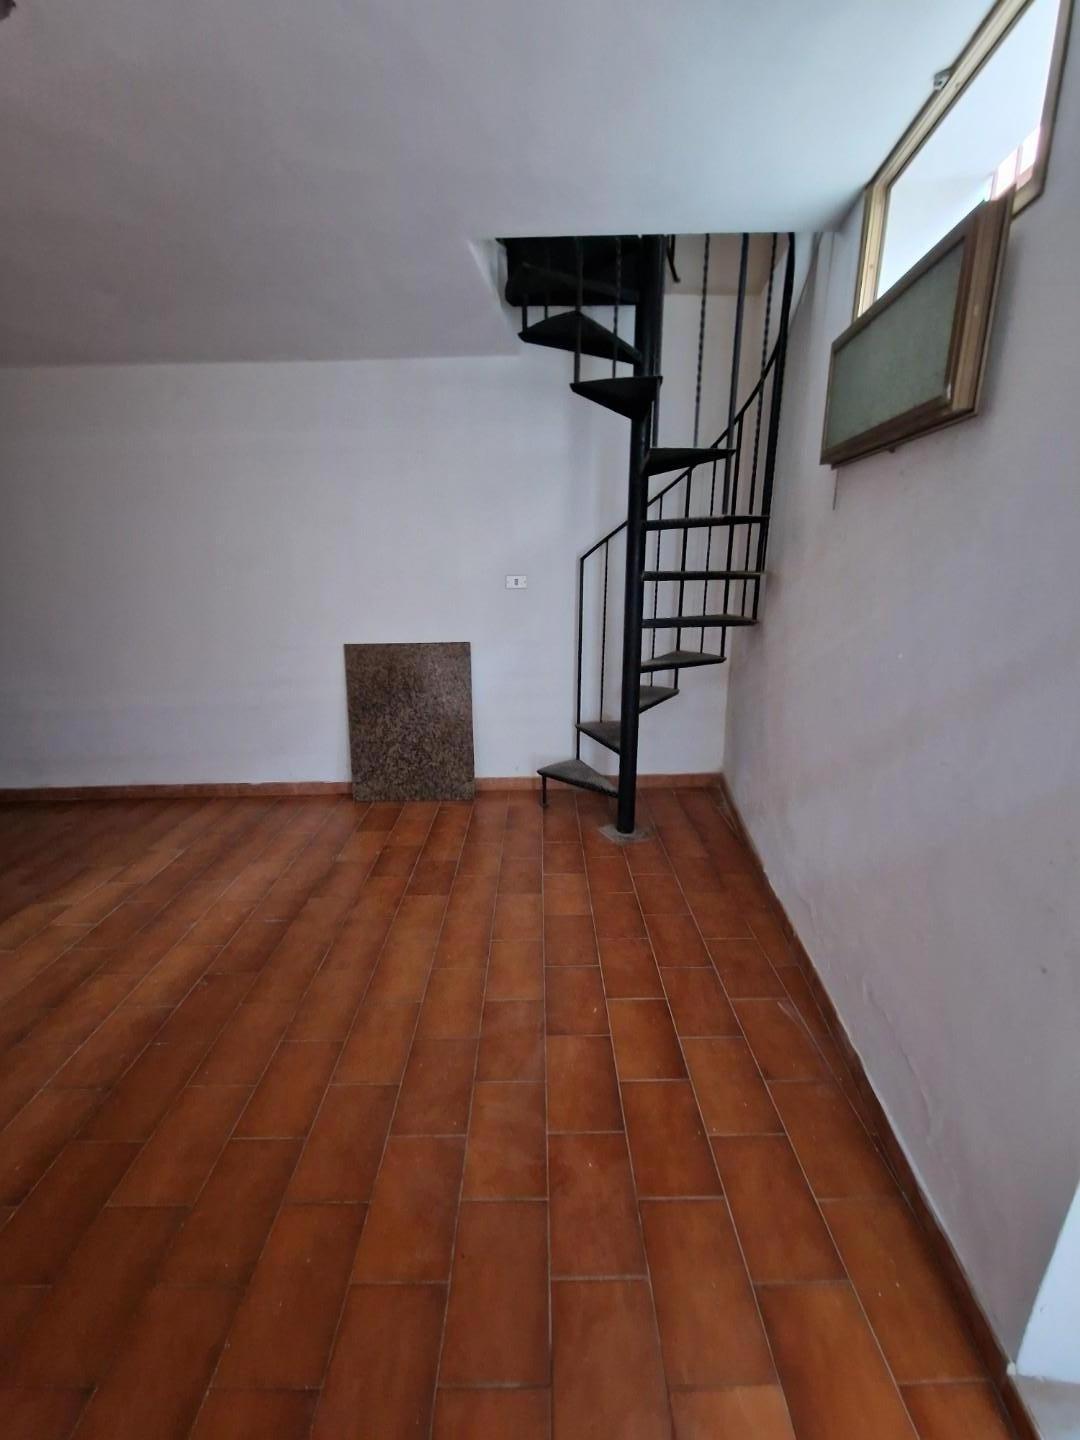 Casa singola in vendita - Avenza, Carrara